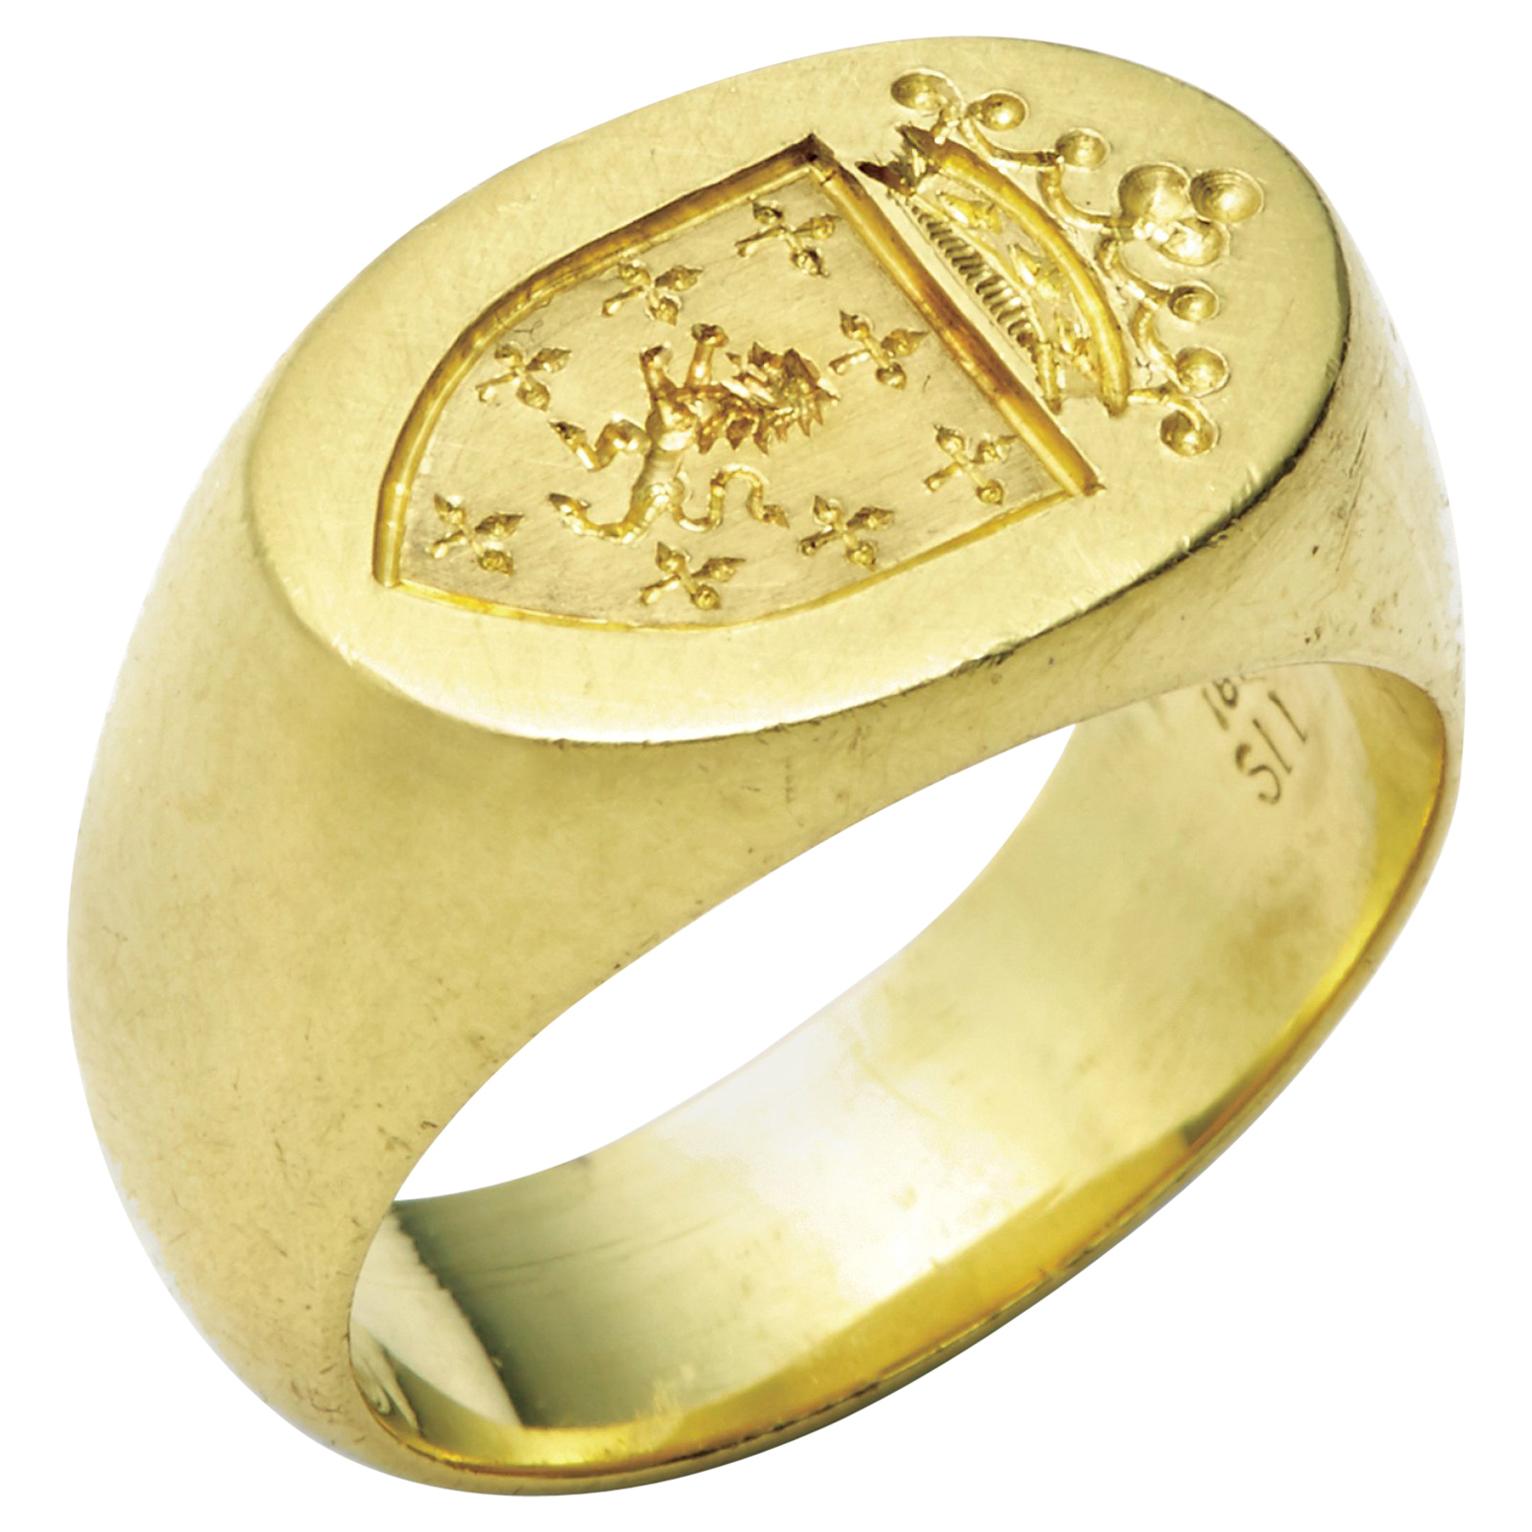 18 Karat Gold Ashley Oval Signet Ring with Custom-Designed, Hand-Engraved Crest